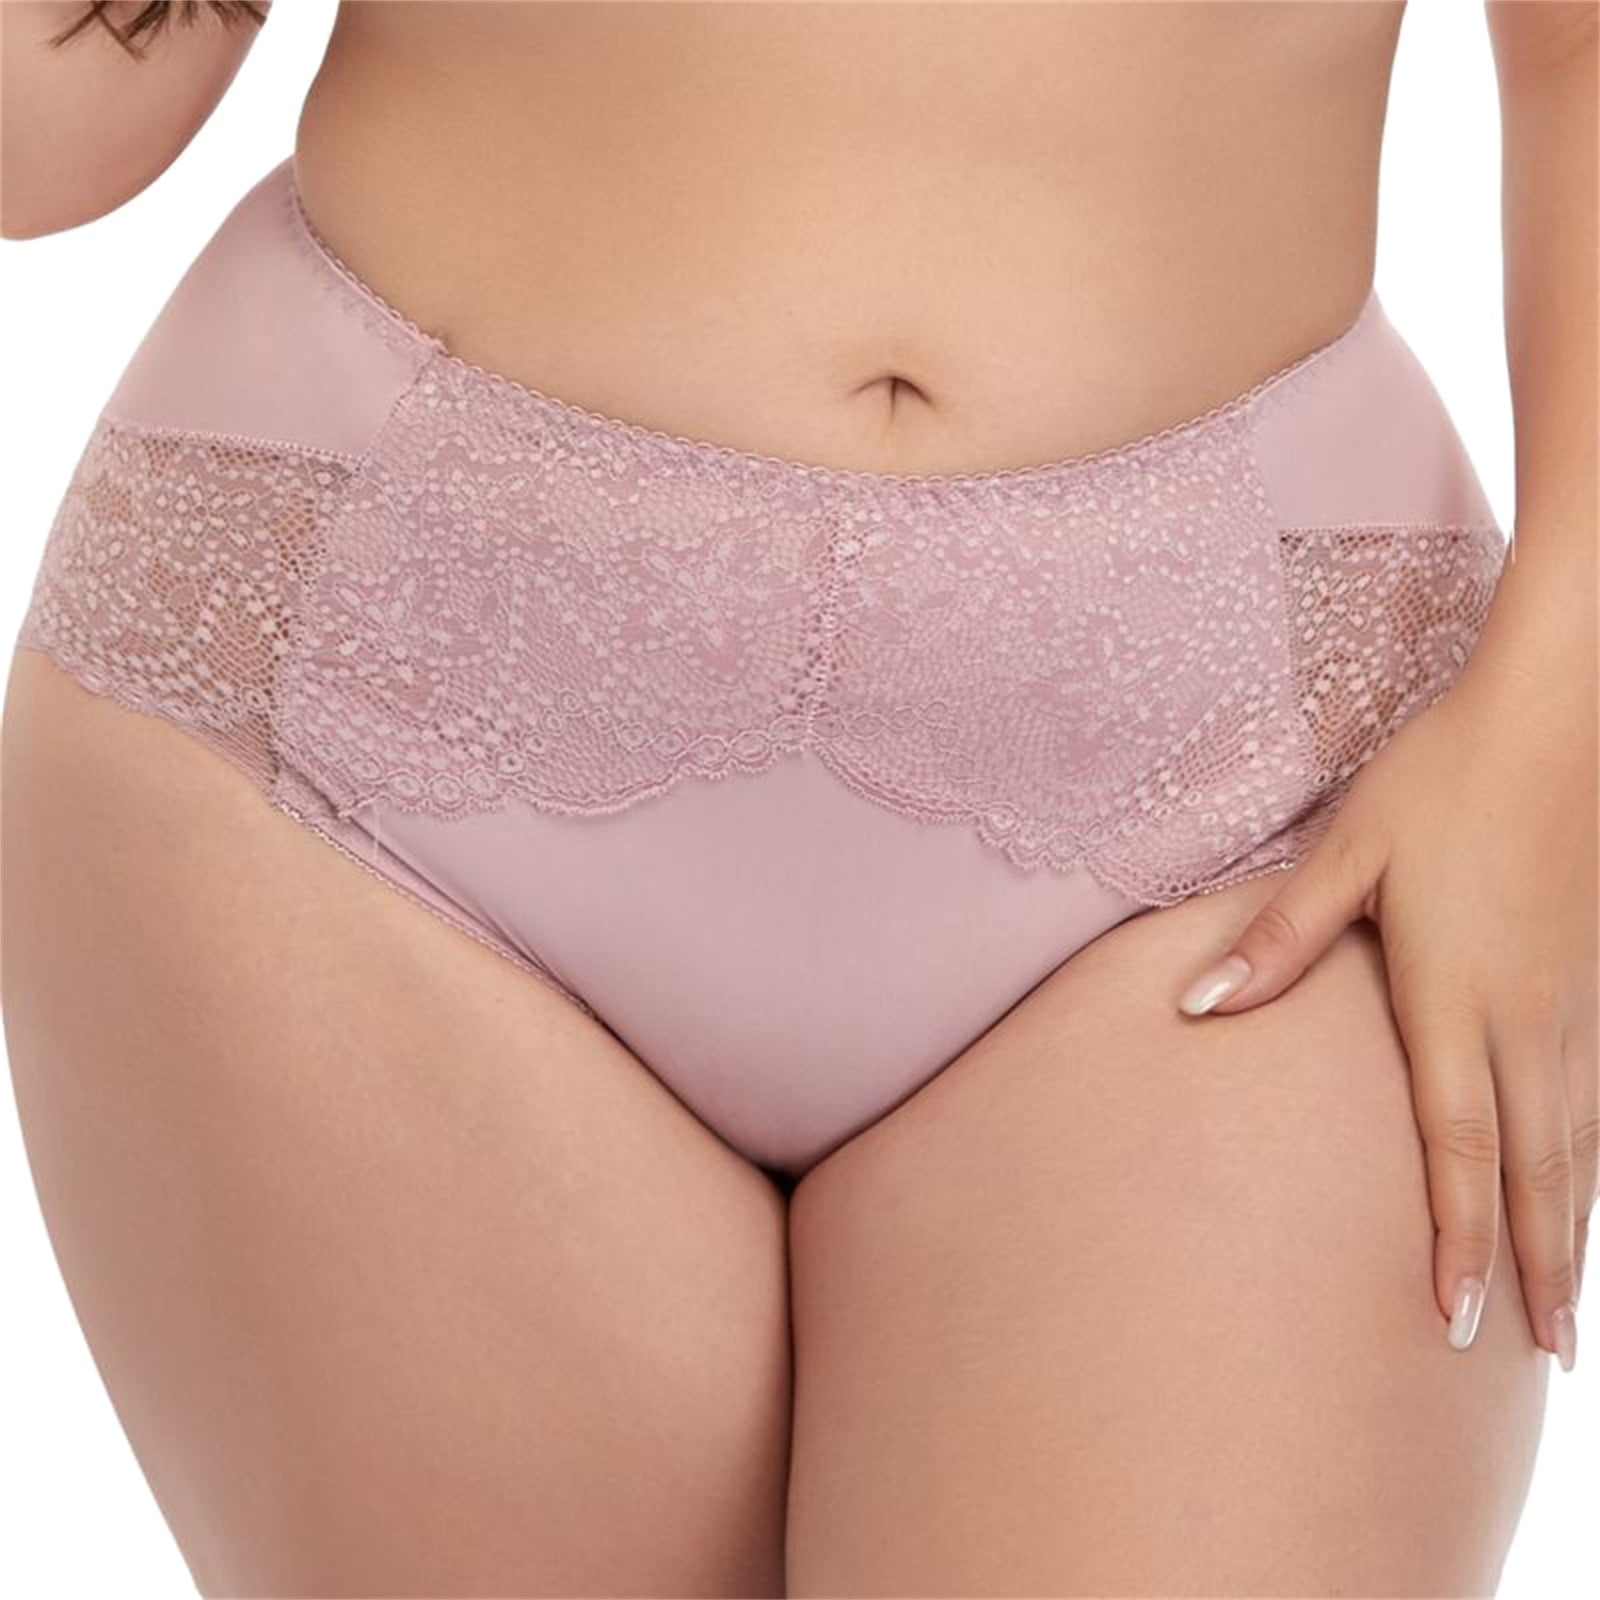 KaLI_store Panties for Women Pack Women’s Underwear Cotton Breathable Brief  Ladies Panties Hot Pink,XXL